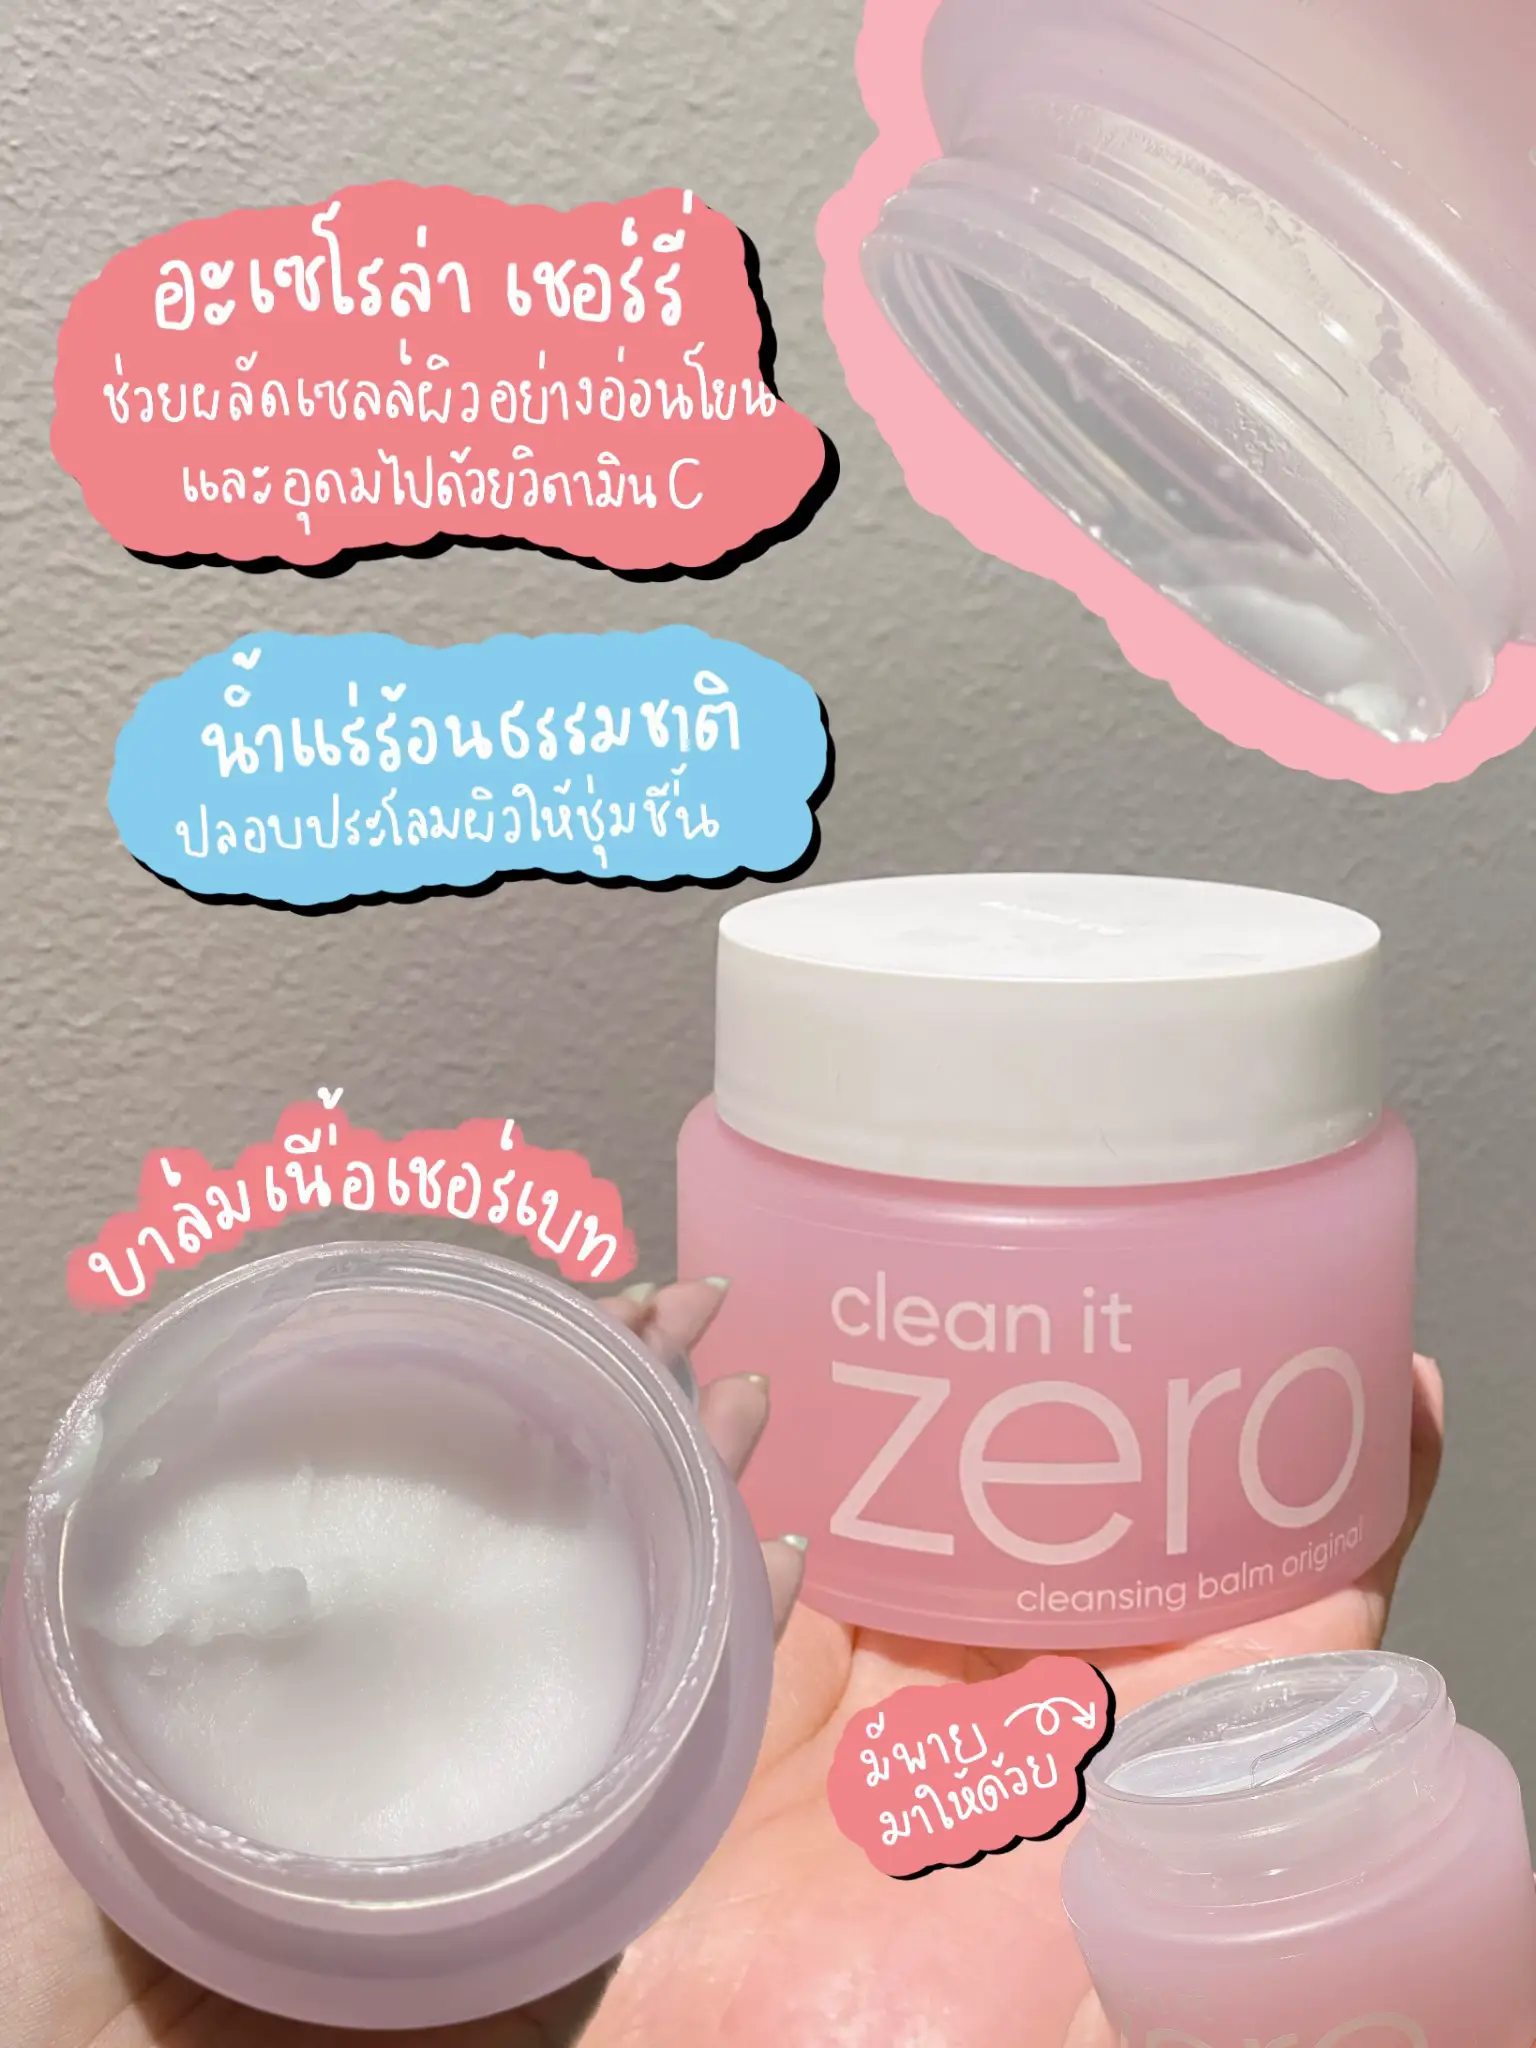 BANILA CO Clean It Zero Cleansing Balm 7ml Moisturizing Makeup